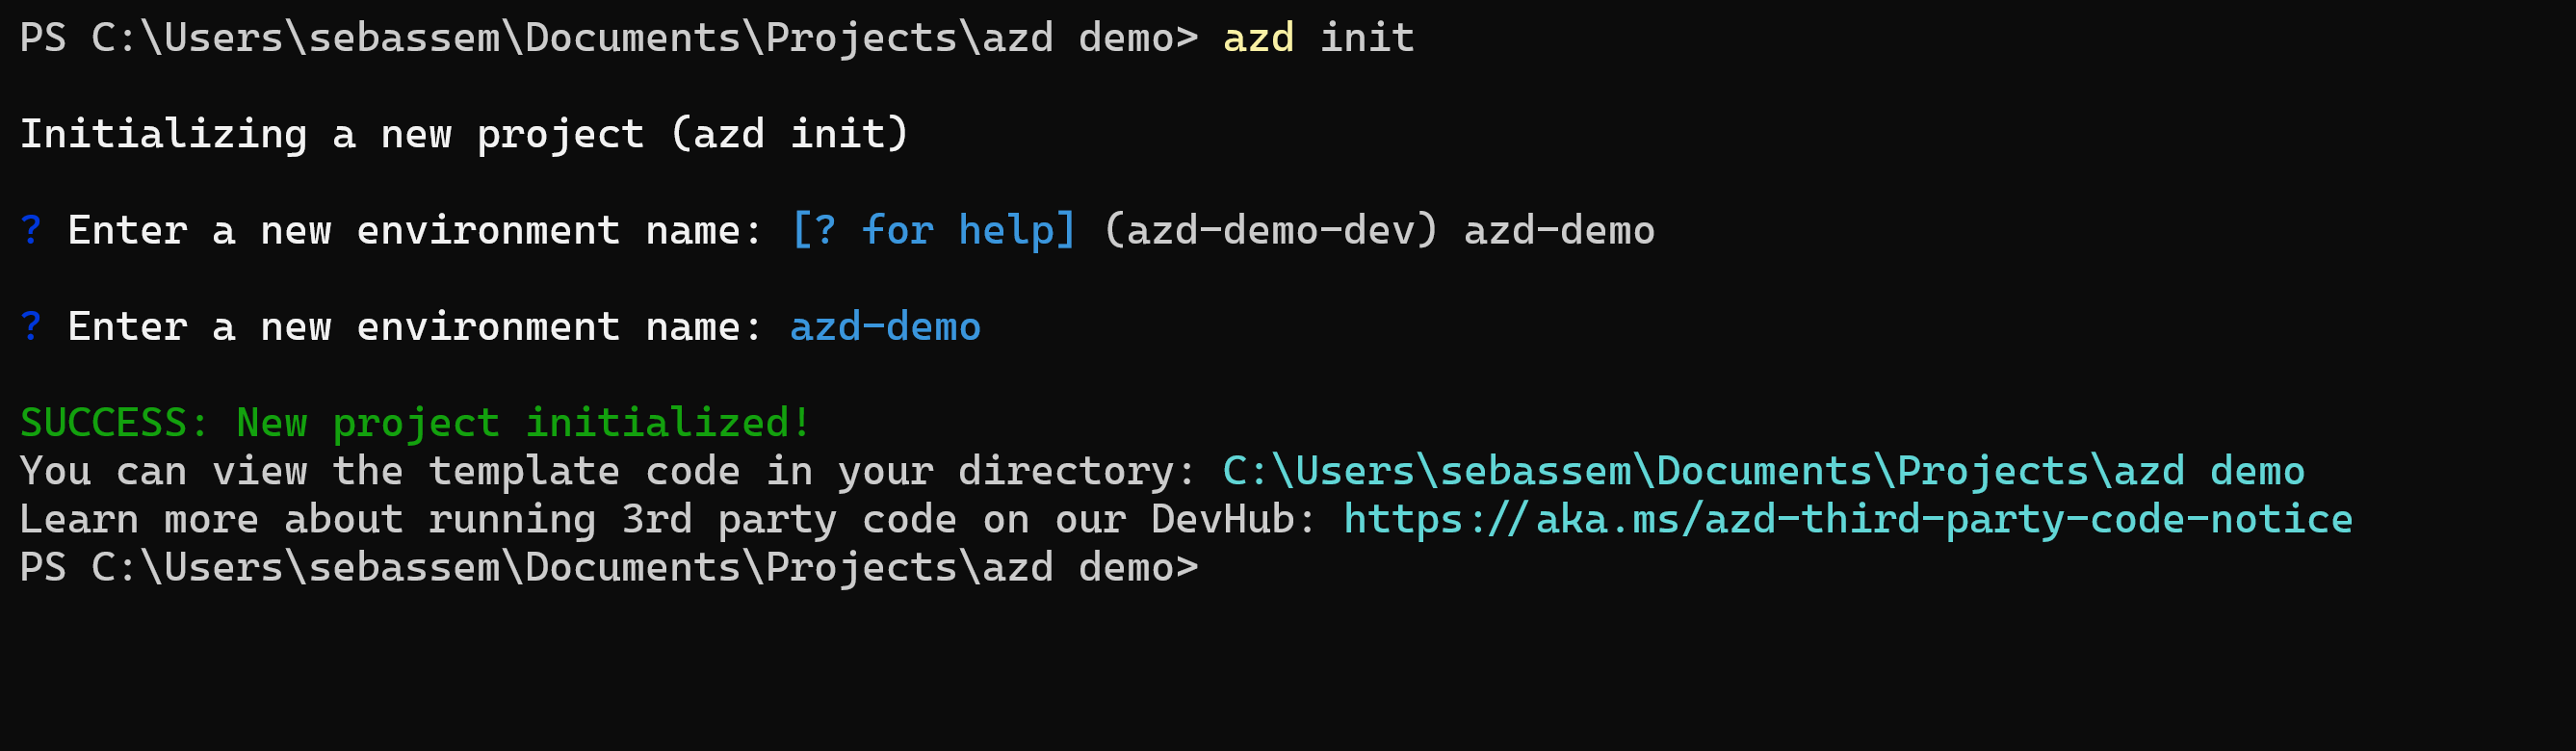 Screenshot showing the azd init command